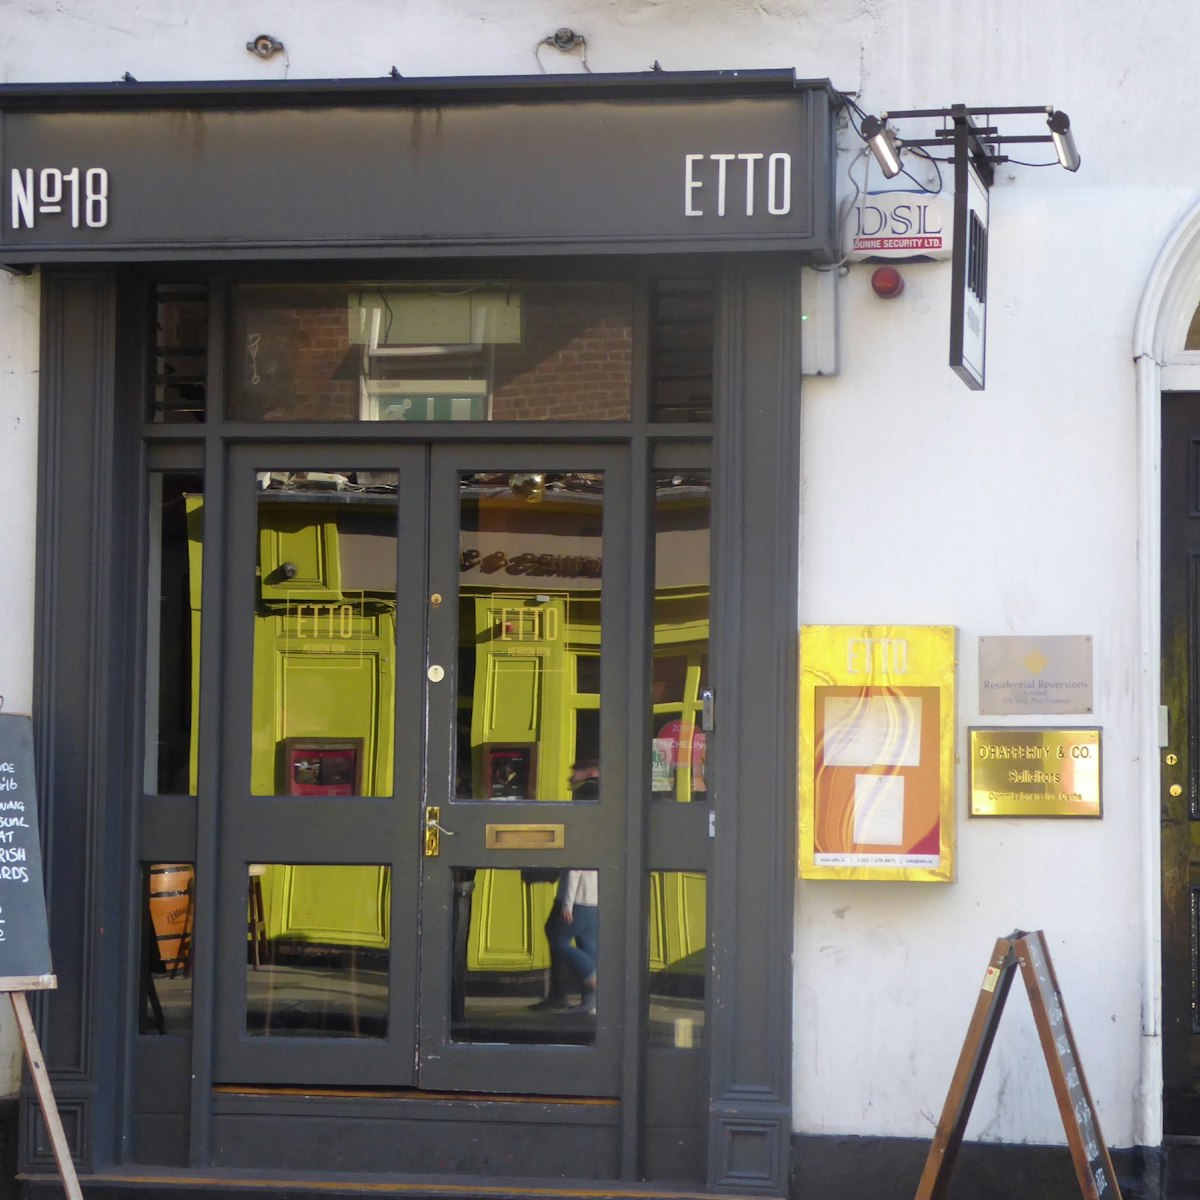 Exterior of Etto, Merrion Row